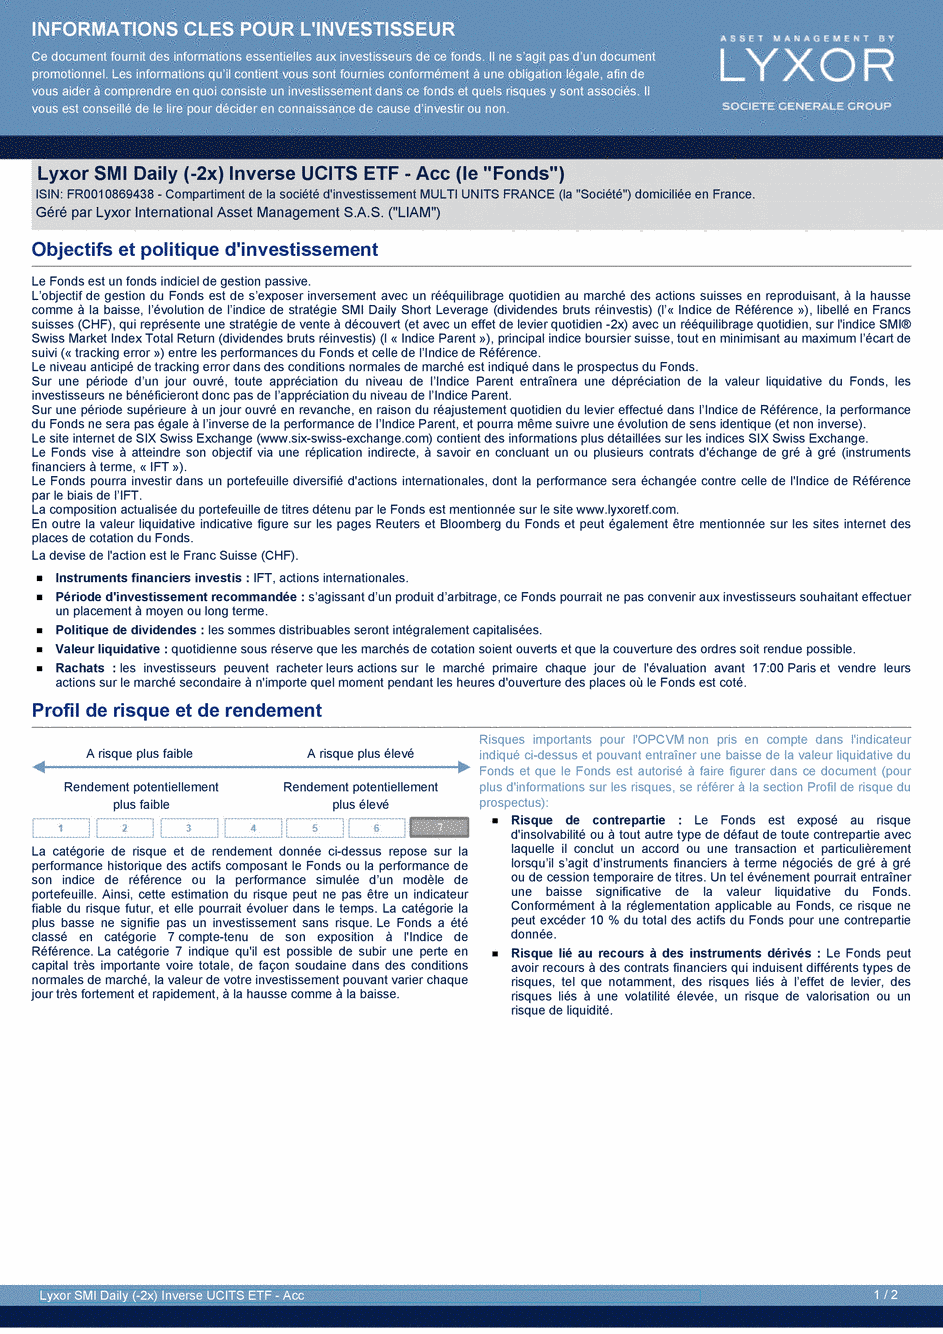 DICI Lyxor SMI Daily (-2x) Inverse UCITS ETF - Acc - 19/02/2021 - Français